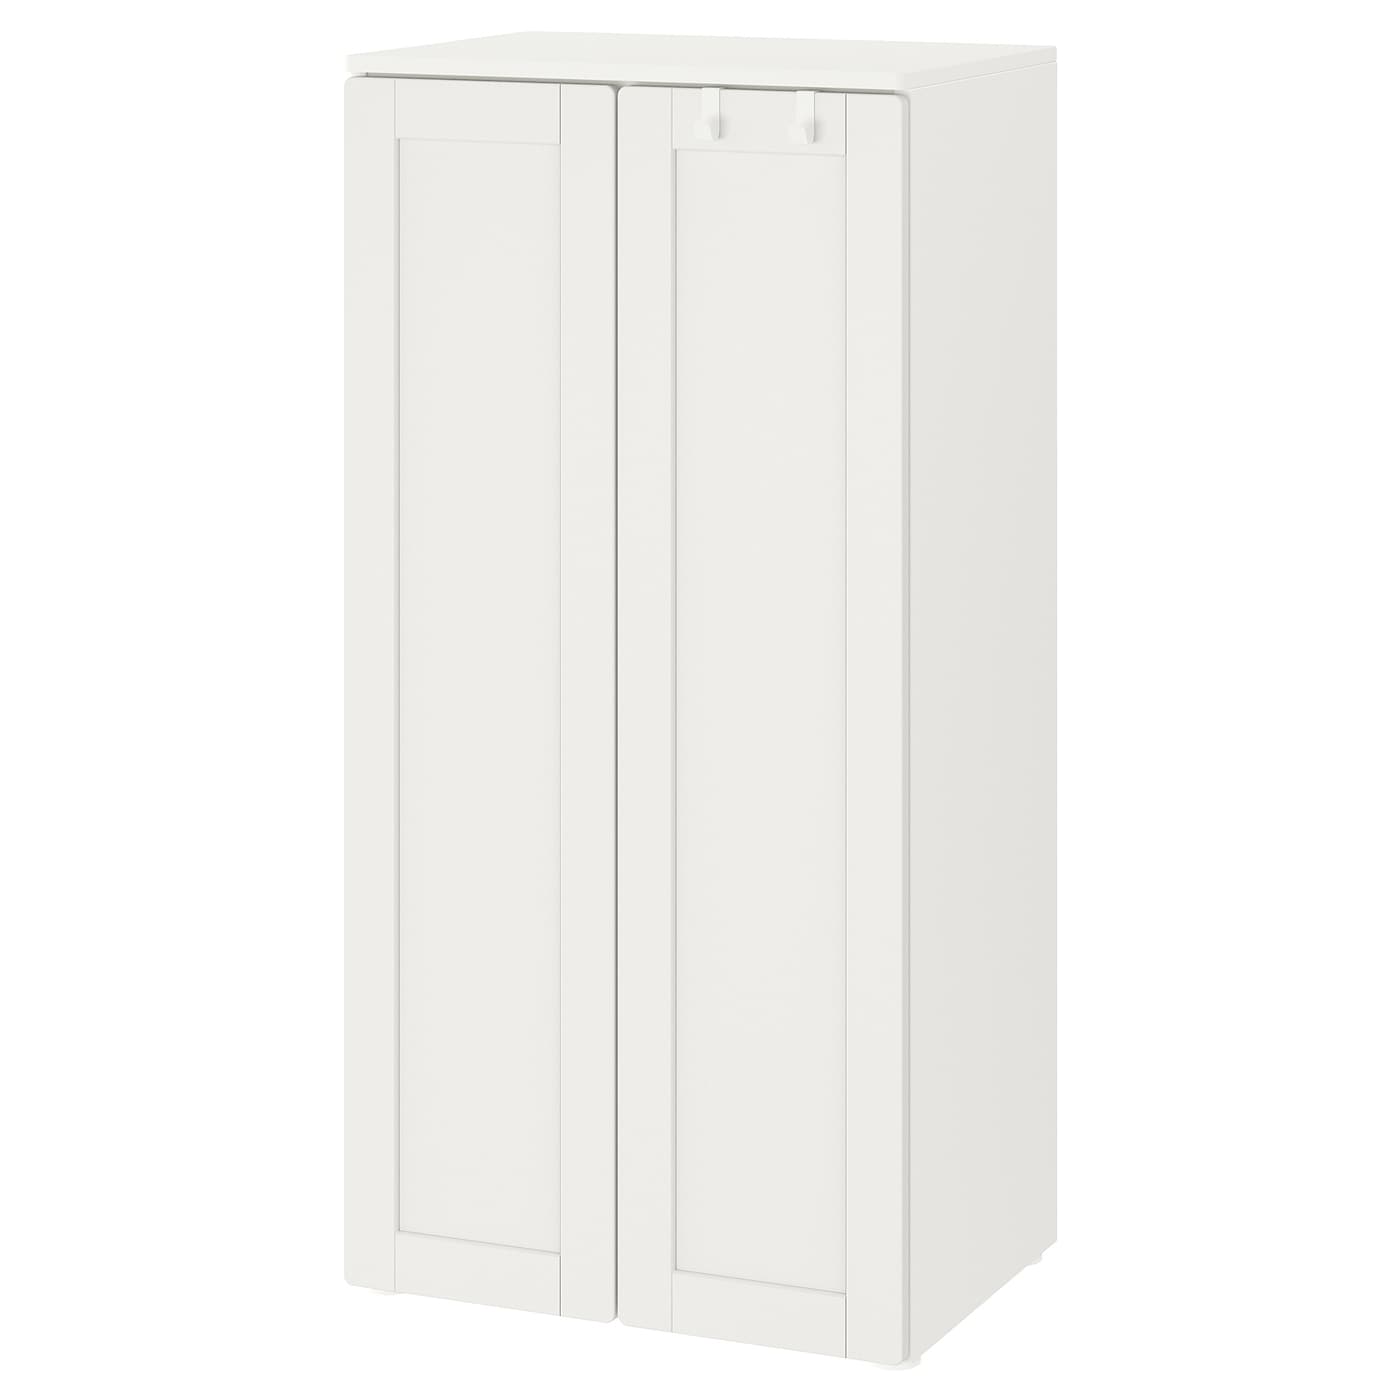 Шкаф - PLATSA/ SMÅSTAD / SMАSTAD  IKEA/ ПЛАТСА/СМОСТАД  ИКЕА, 60x40x123 см, белый